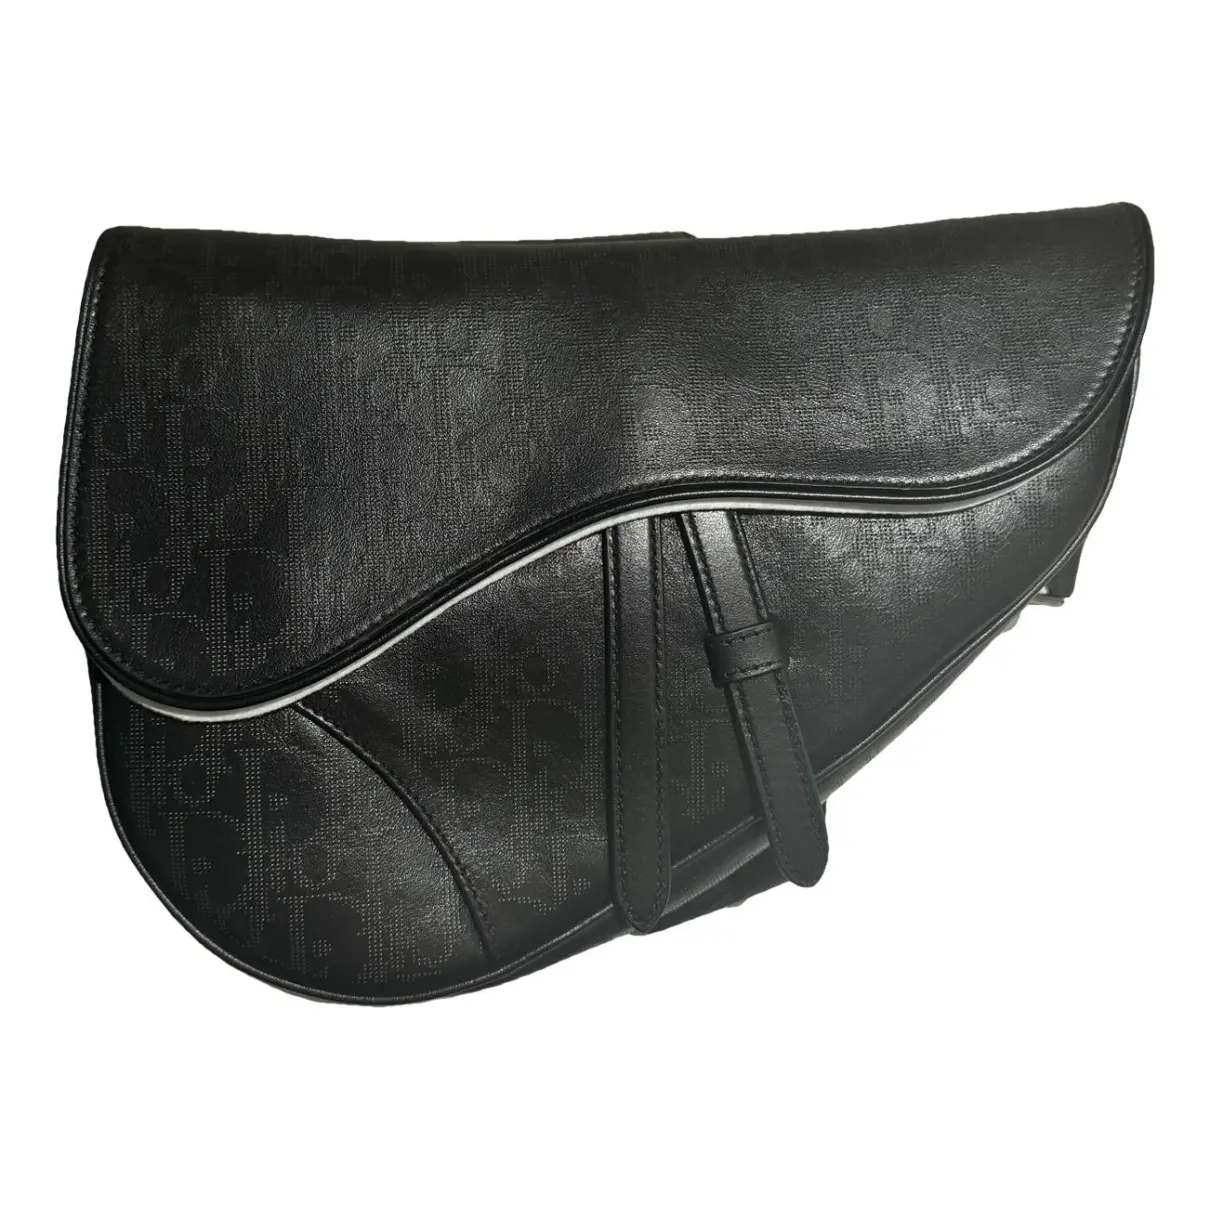 Saddle leather bag